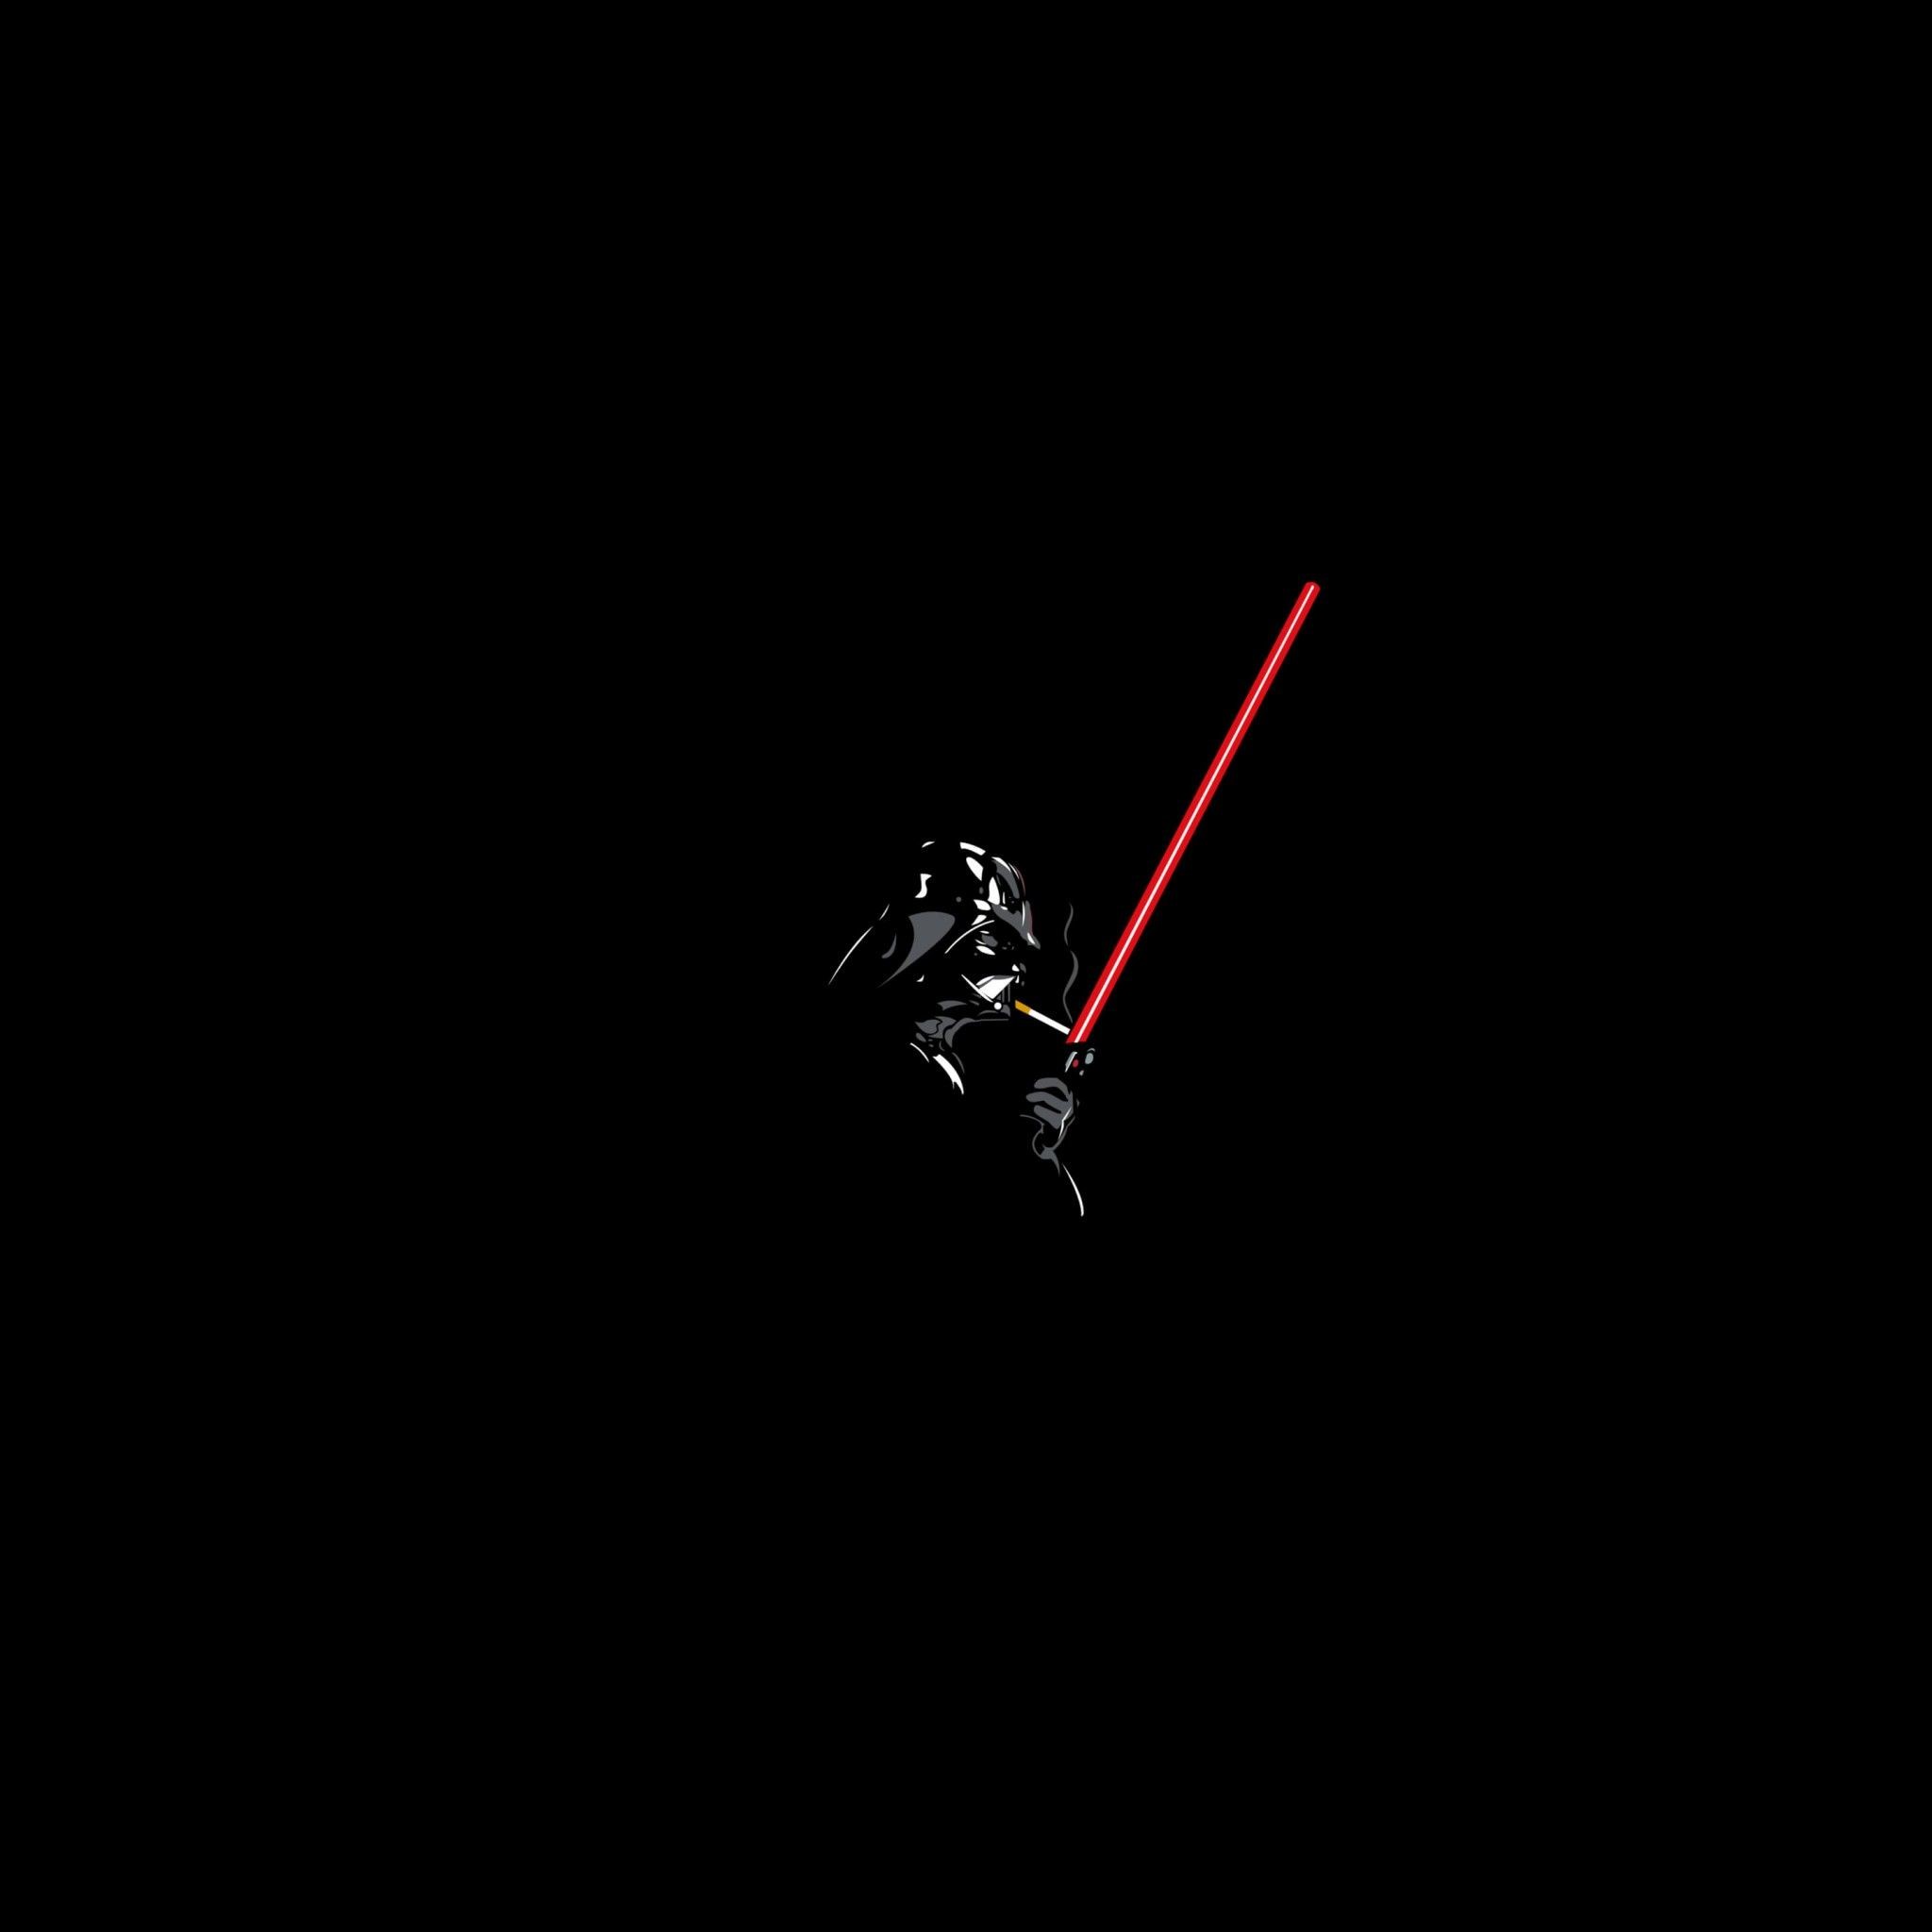 2048x2048 Download Darth Vader Lighting a Cigarette HD wallpaper for Nexus 9 .